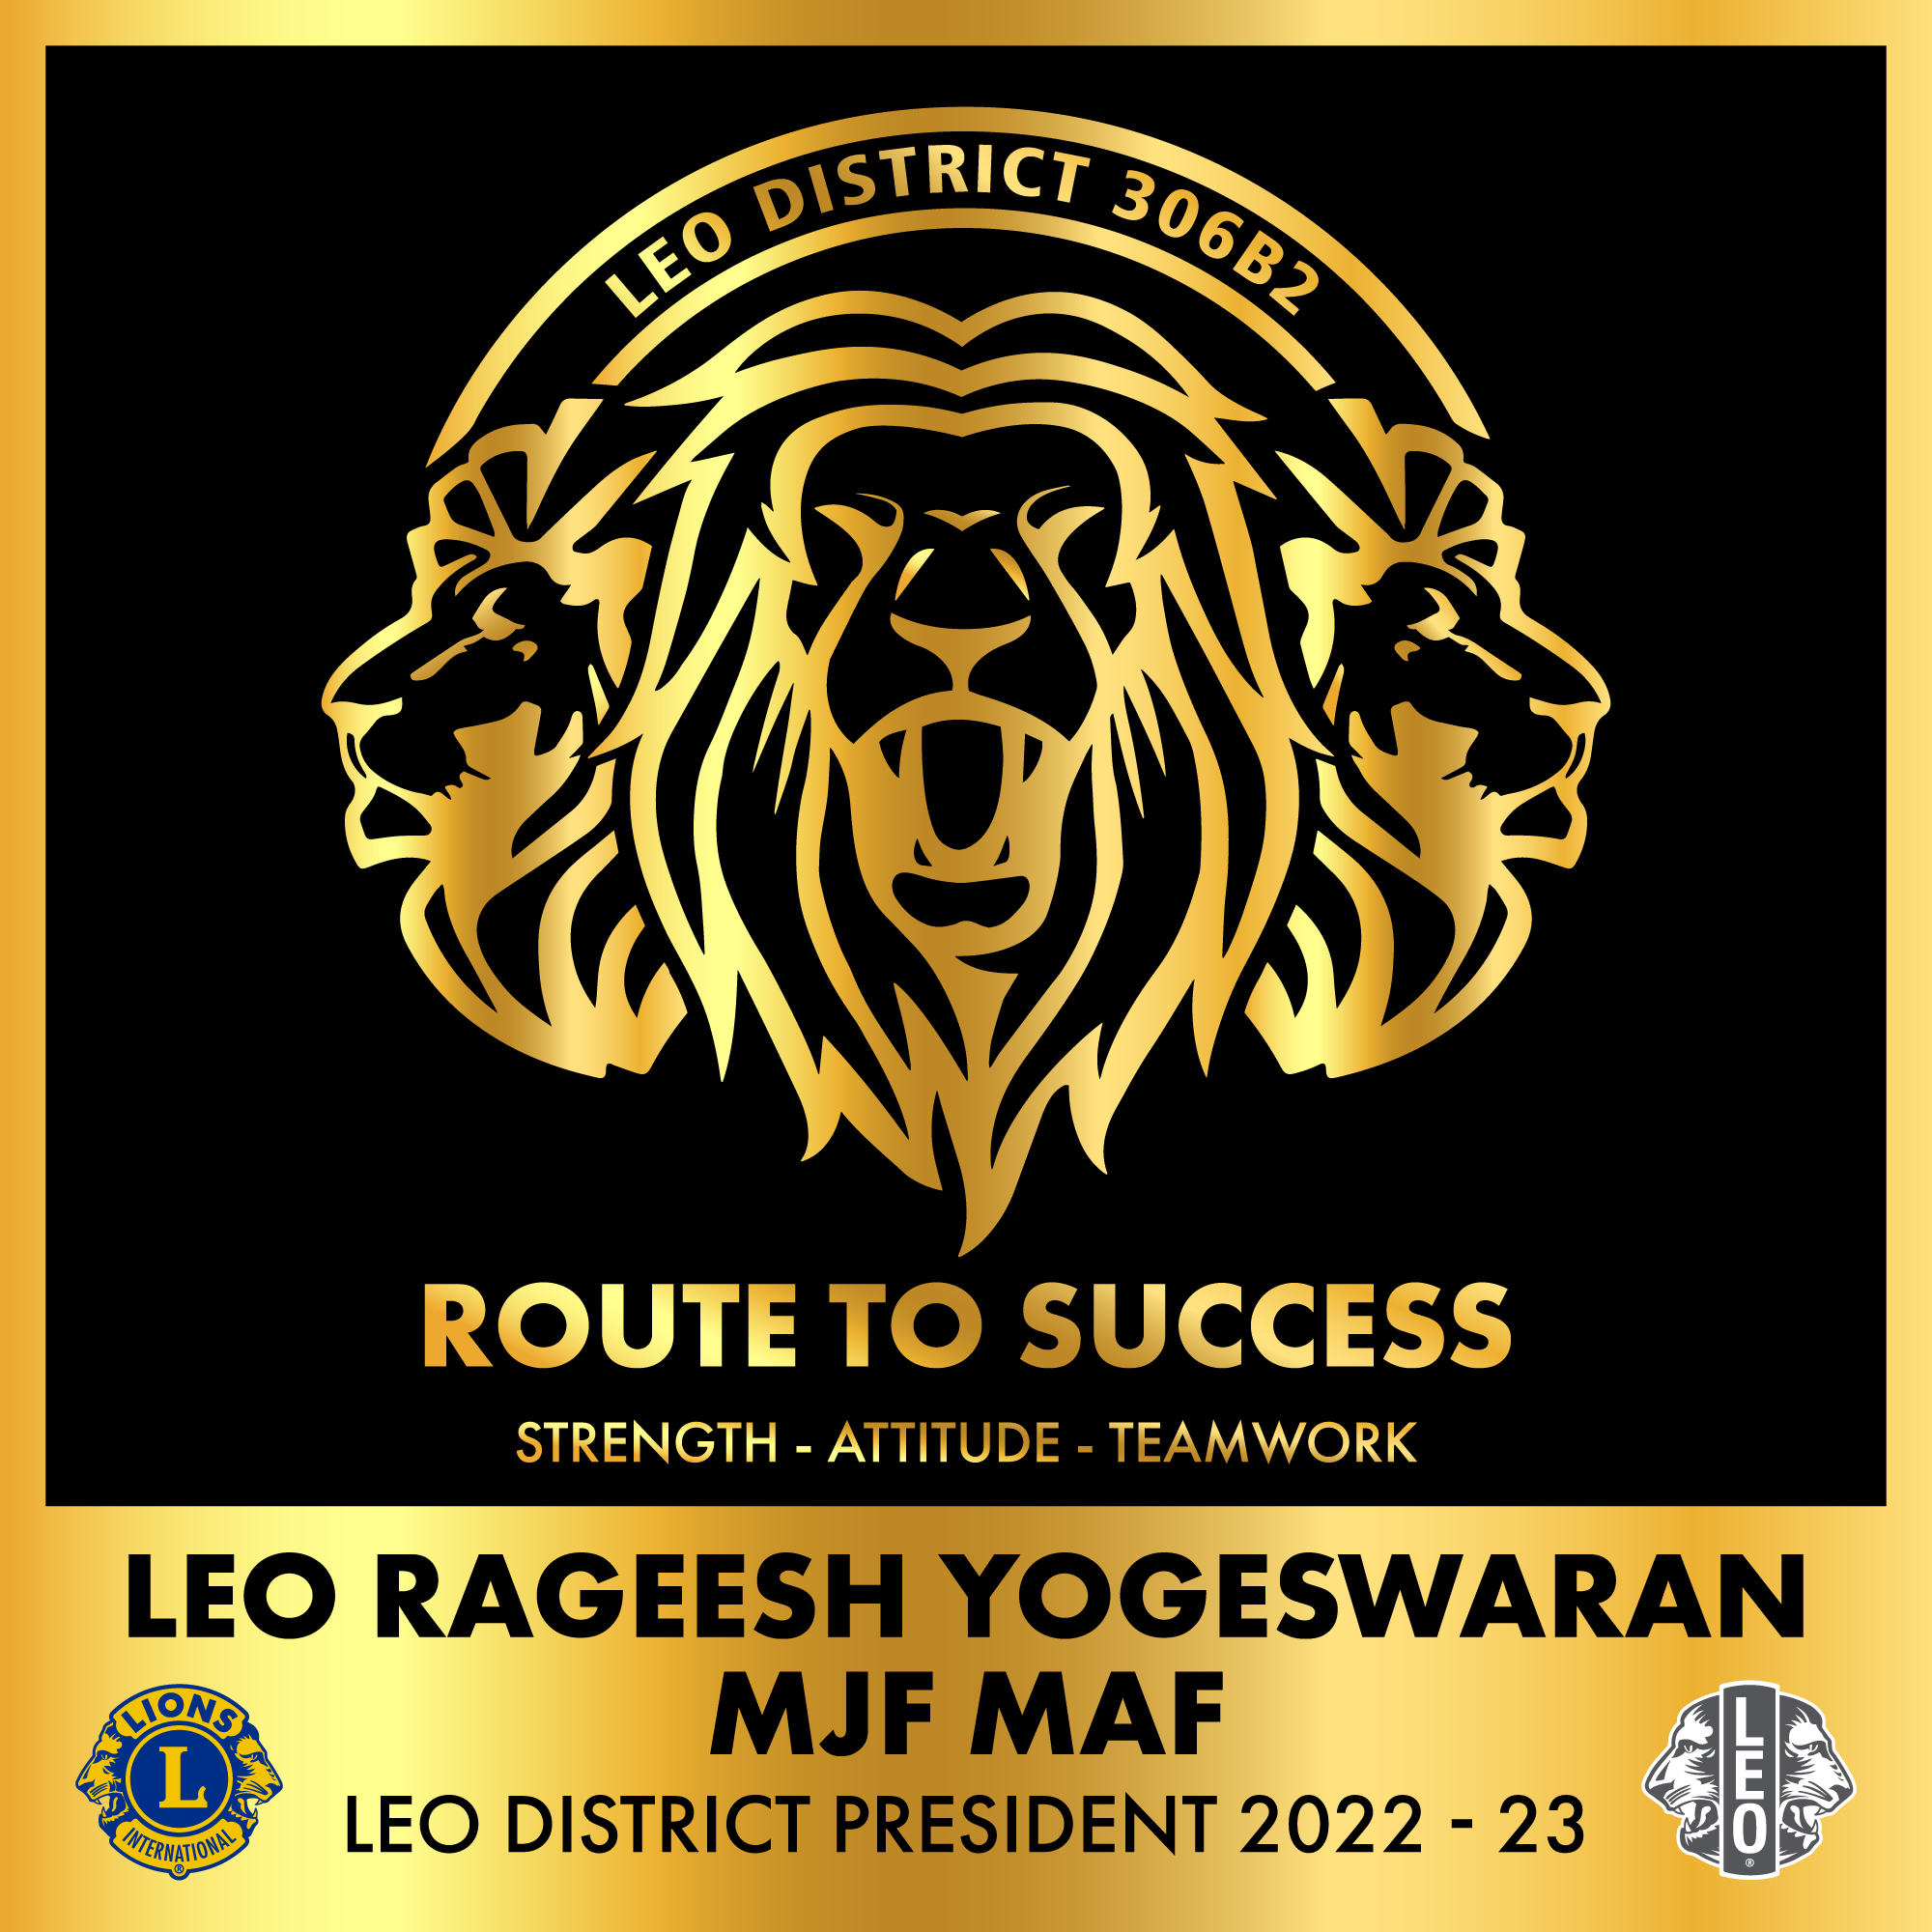 Leo District 306 B2